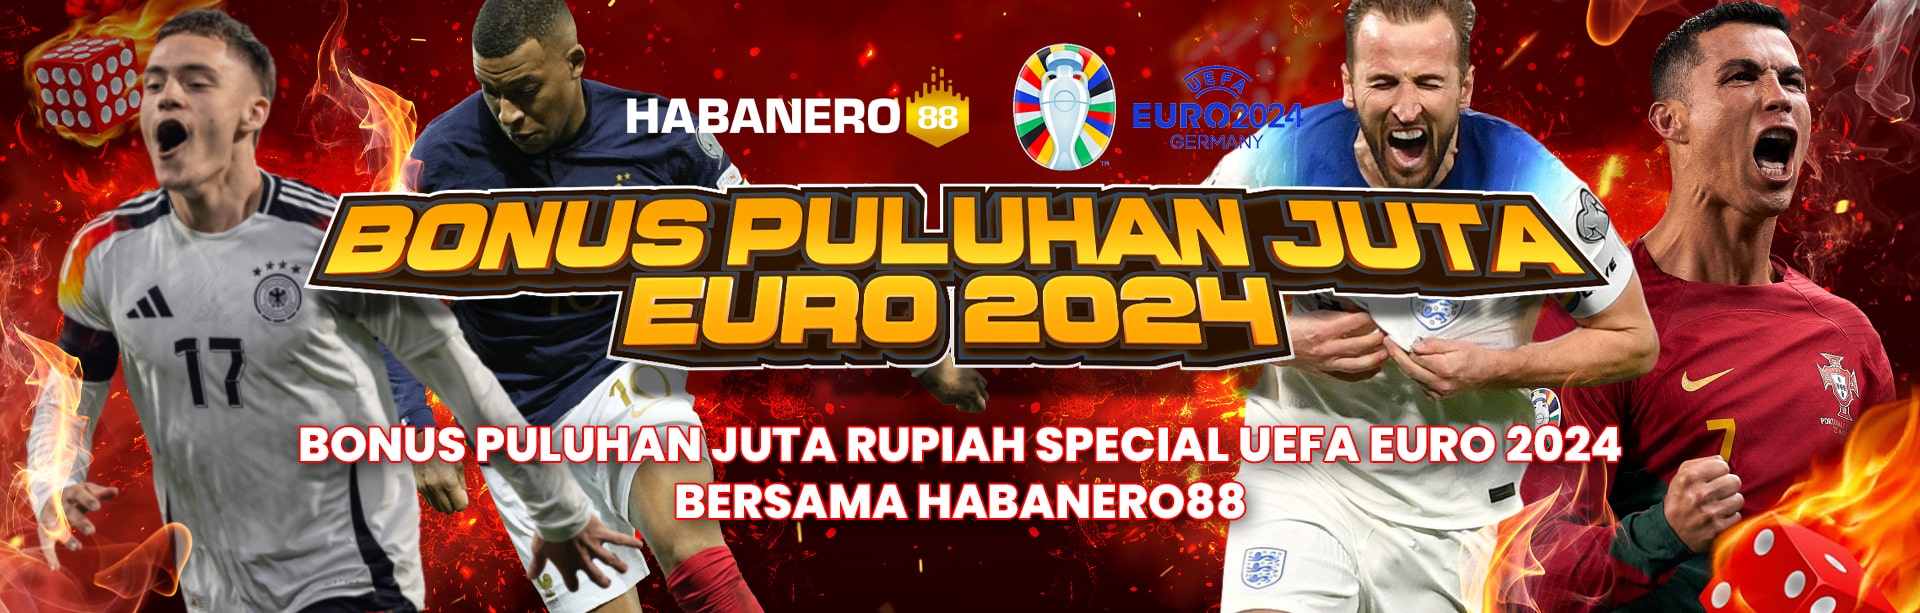 HABANERO88 EVENT SPESIAL EURO 2024 